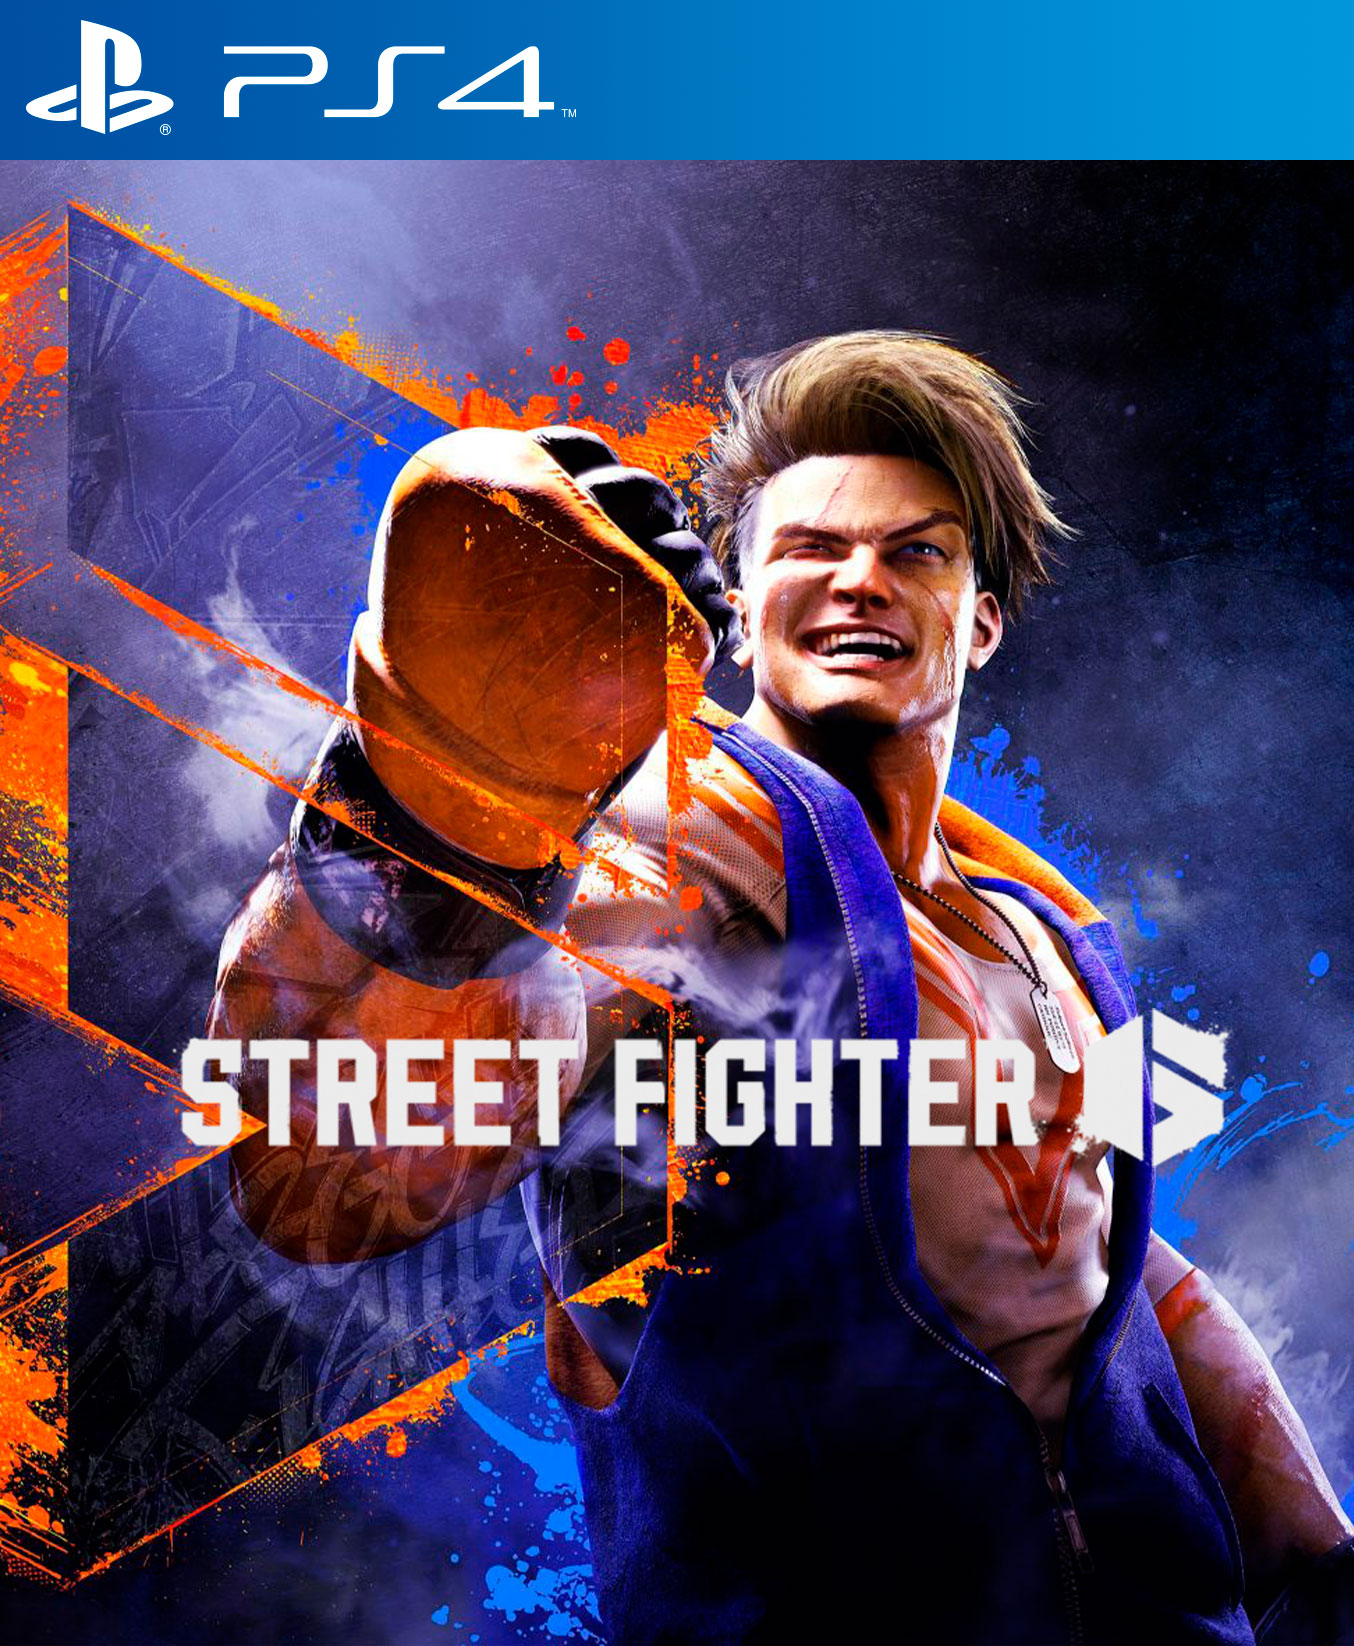 Street Fighter VI PS4, Juegos Digitales Chile